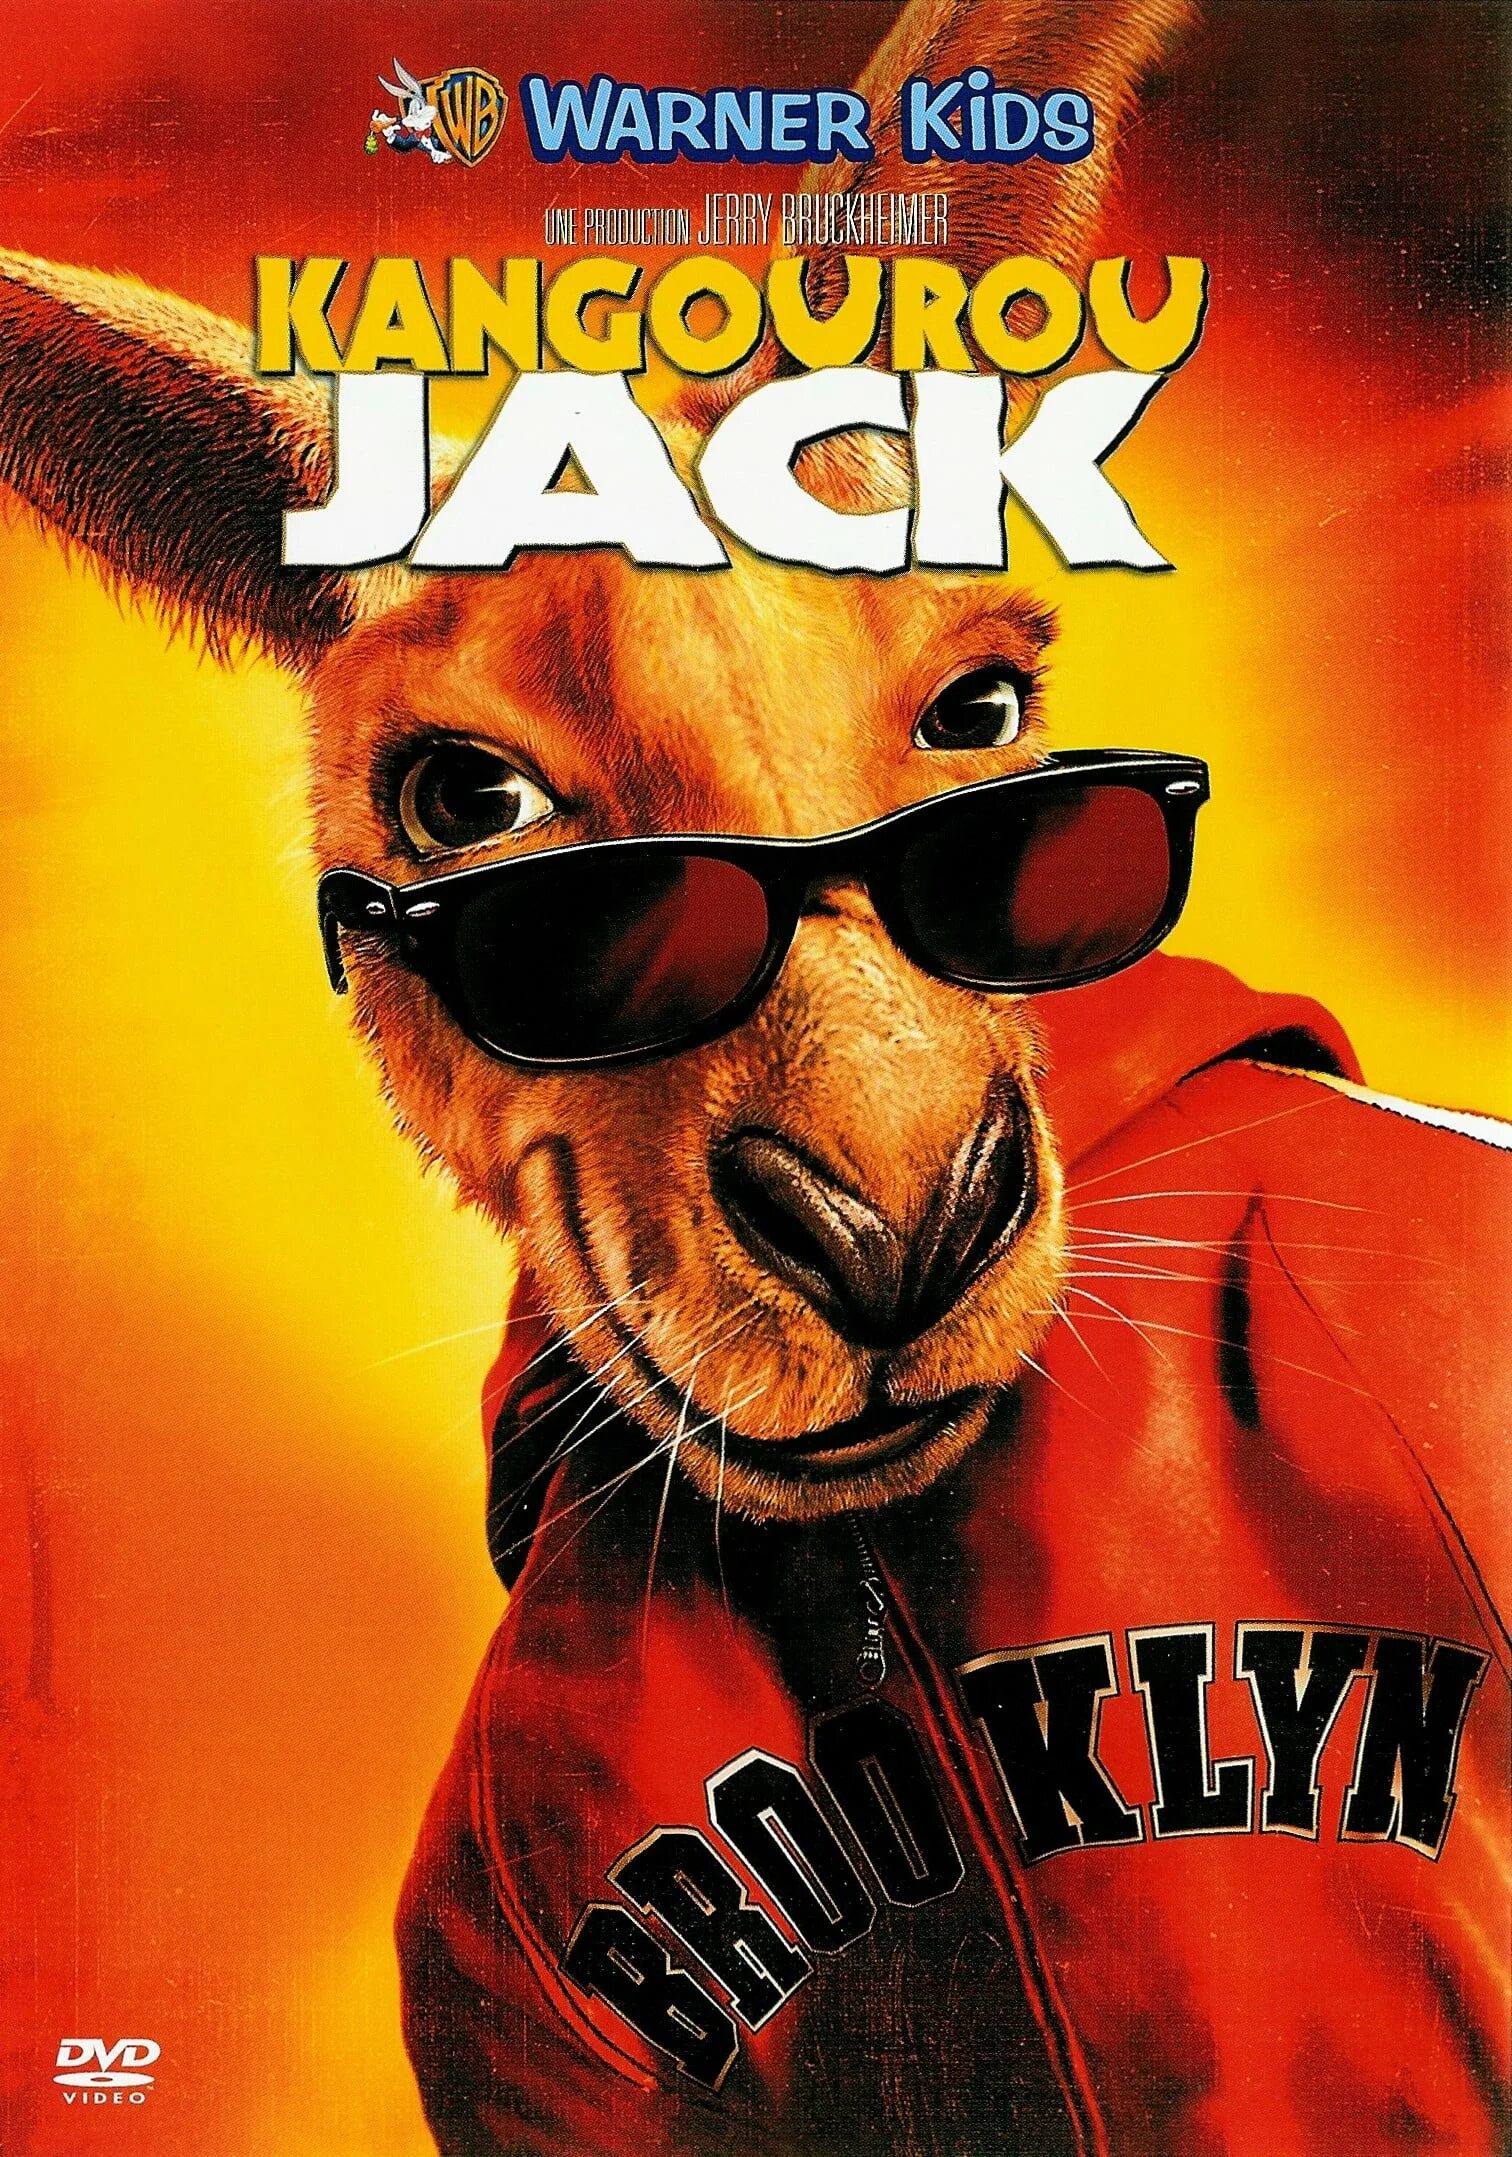 Kangaroo Jack 2003. Кенгуру джекпот 2003